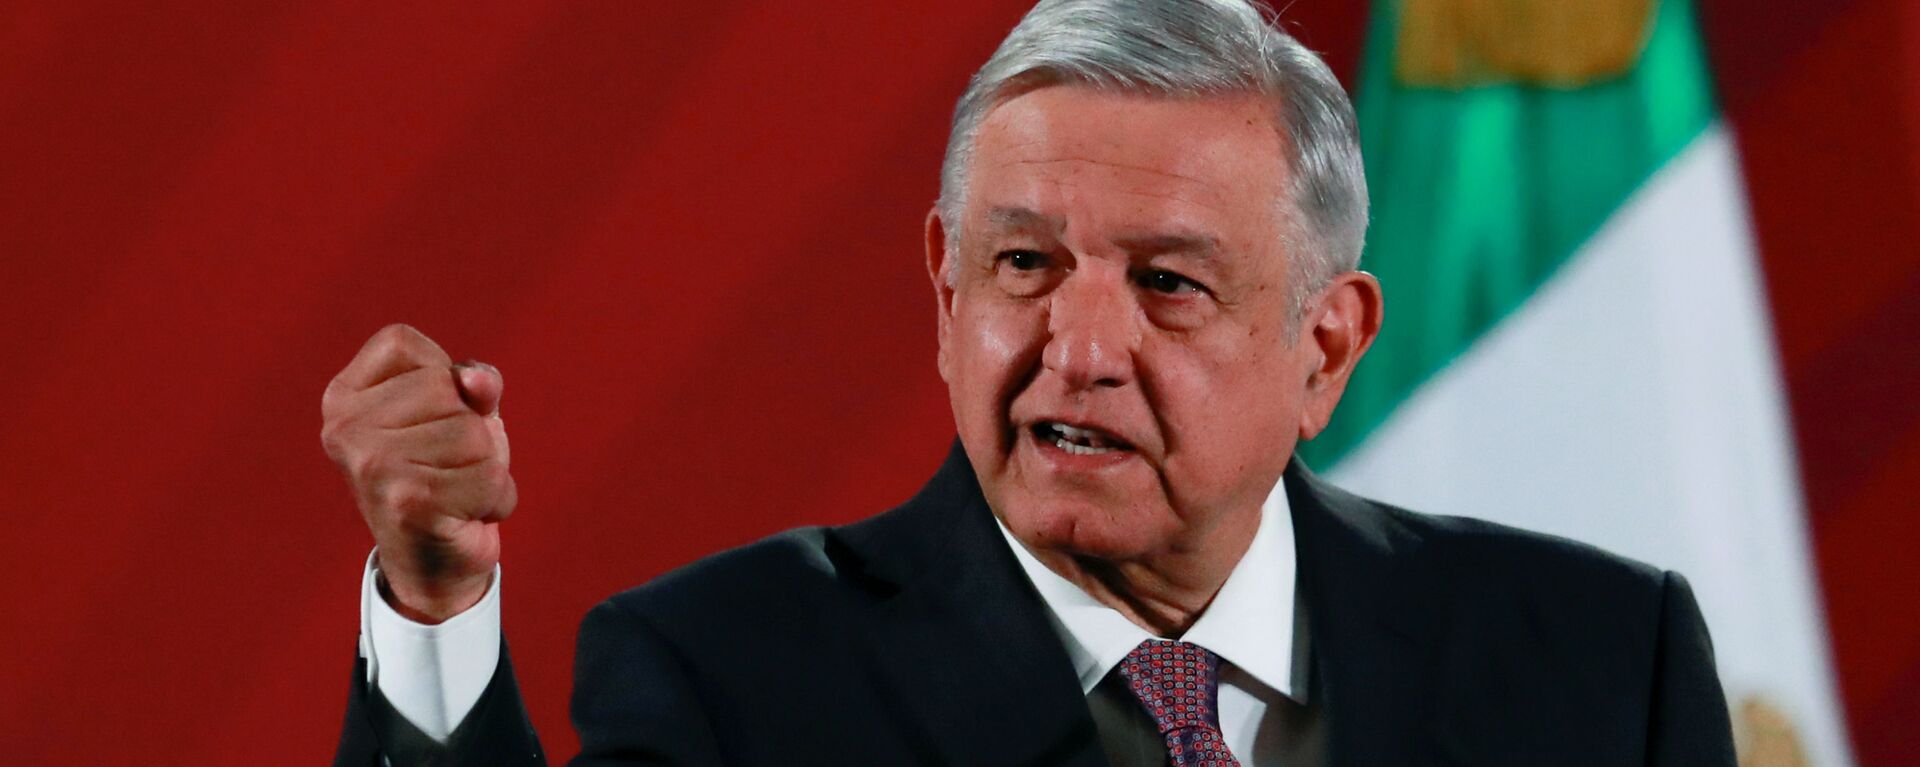 El presidente de México, Andrés Manuel López Obrador - Sputnik Mundo, 1920, 25.06.2020